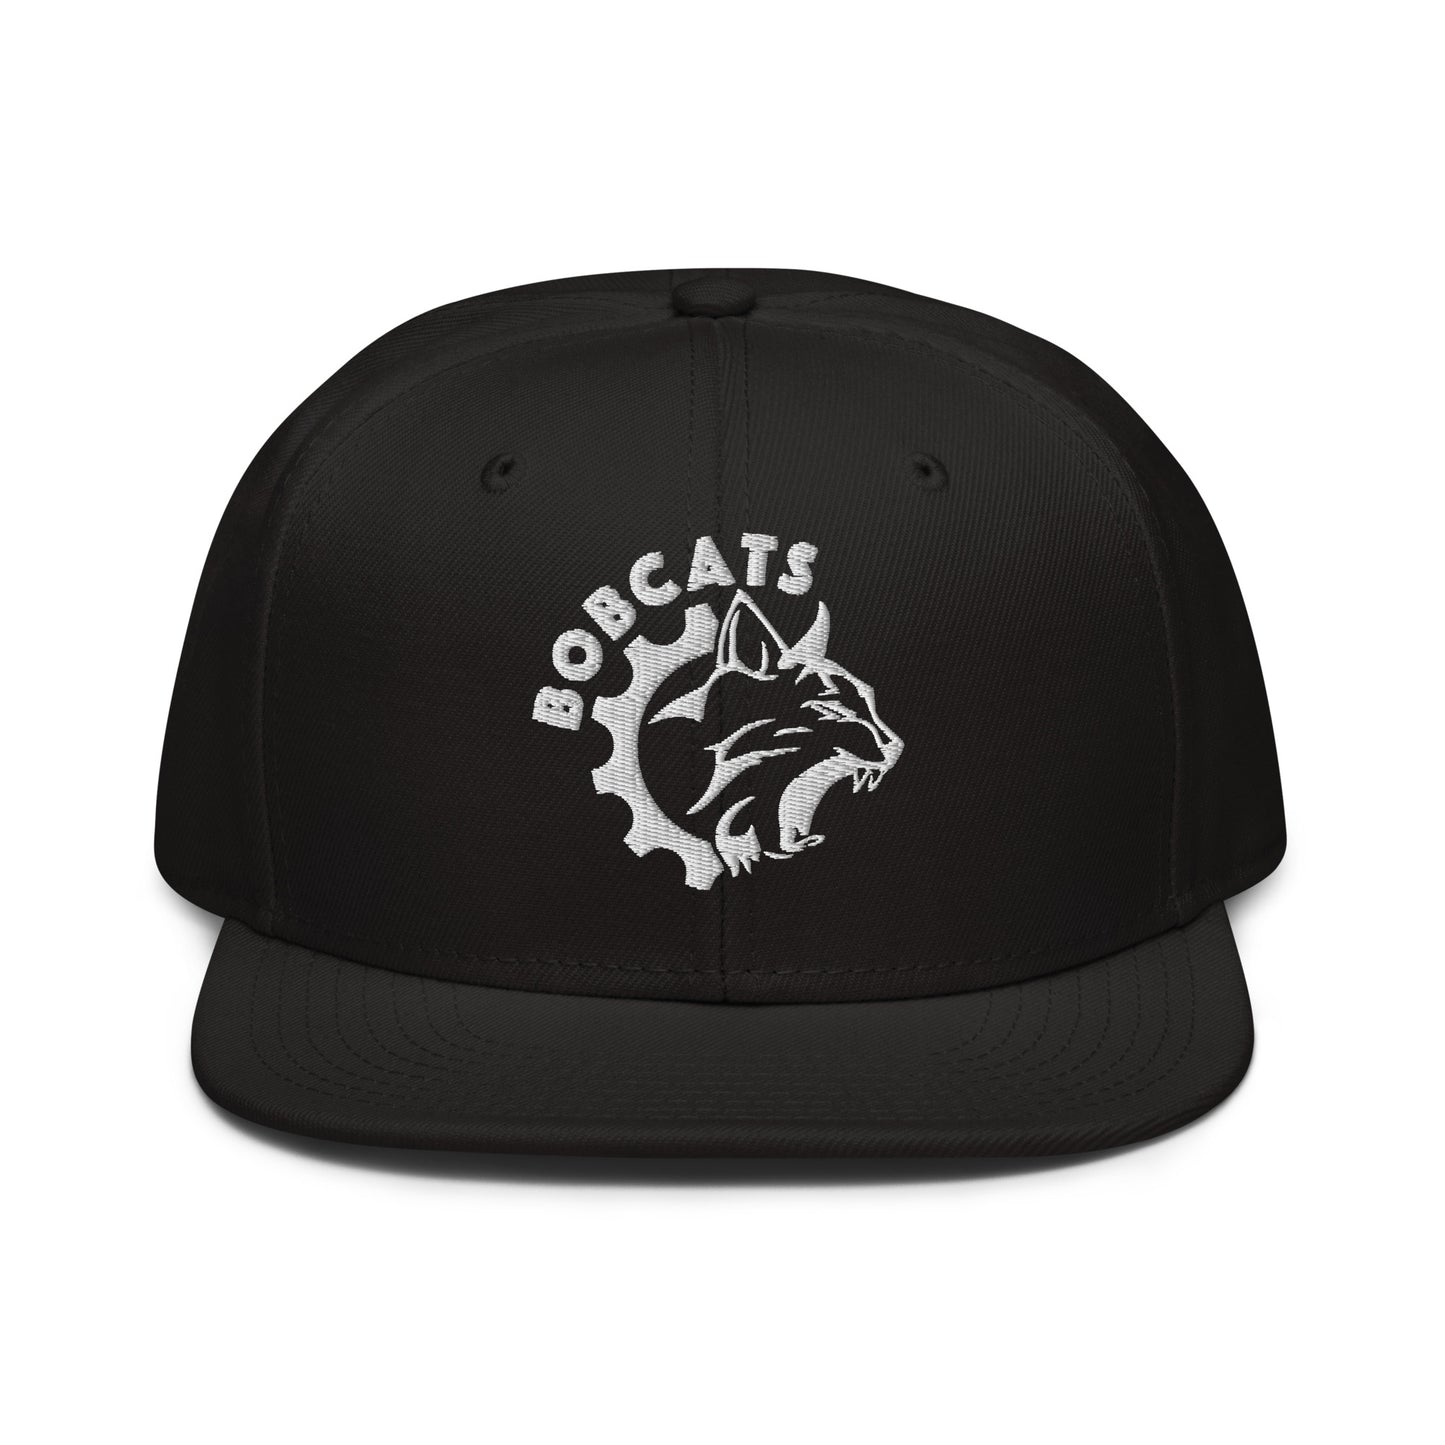 Bobcats Snapback Flat Hat